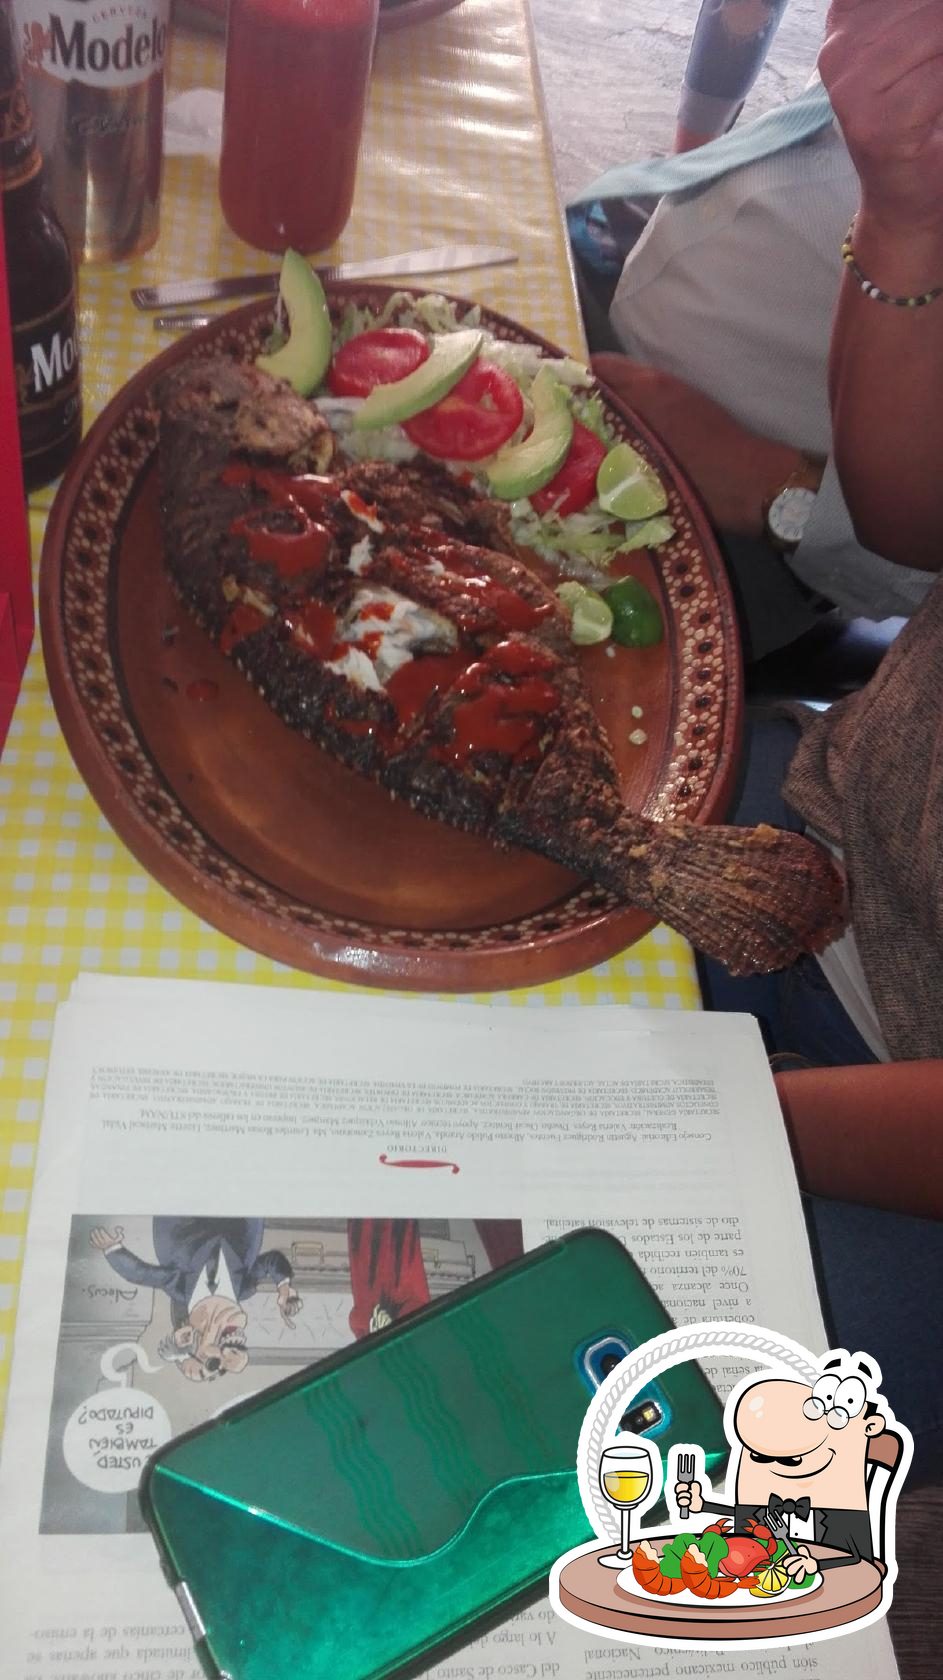 Restaurante Frida, Mexico, Tepeyautle 115 - Opiniones del restaurante